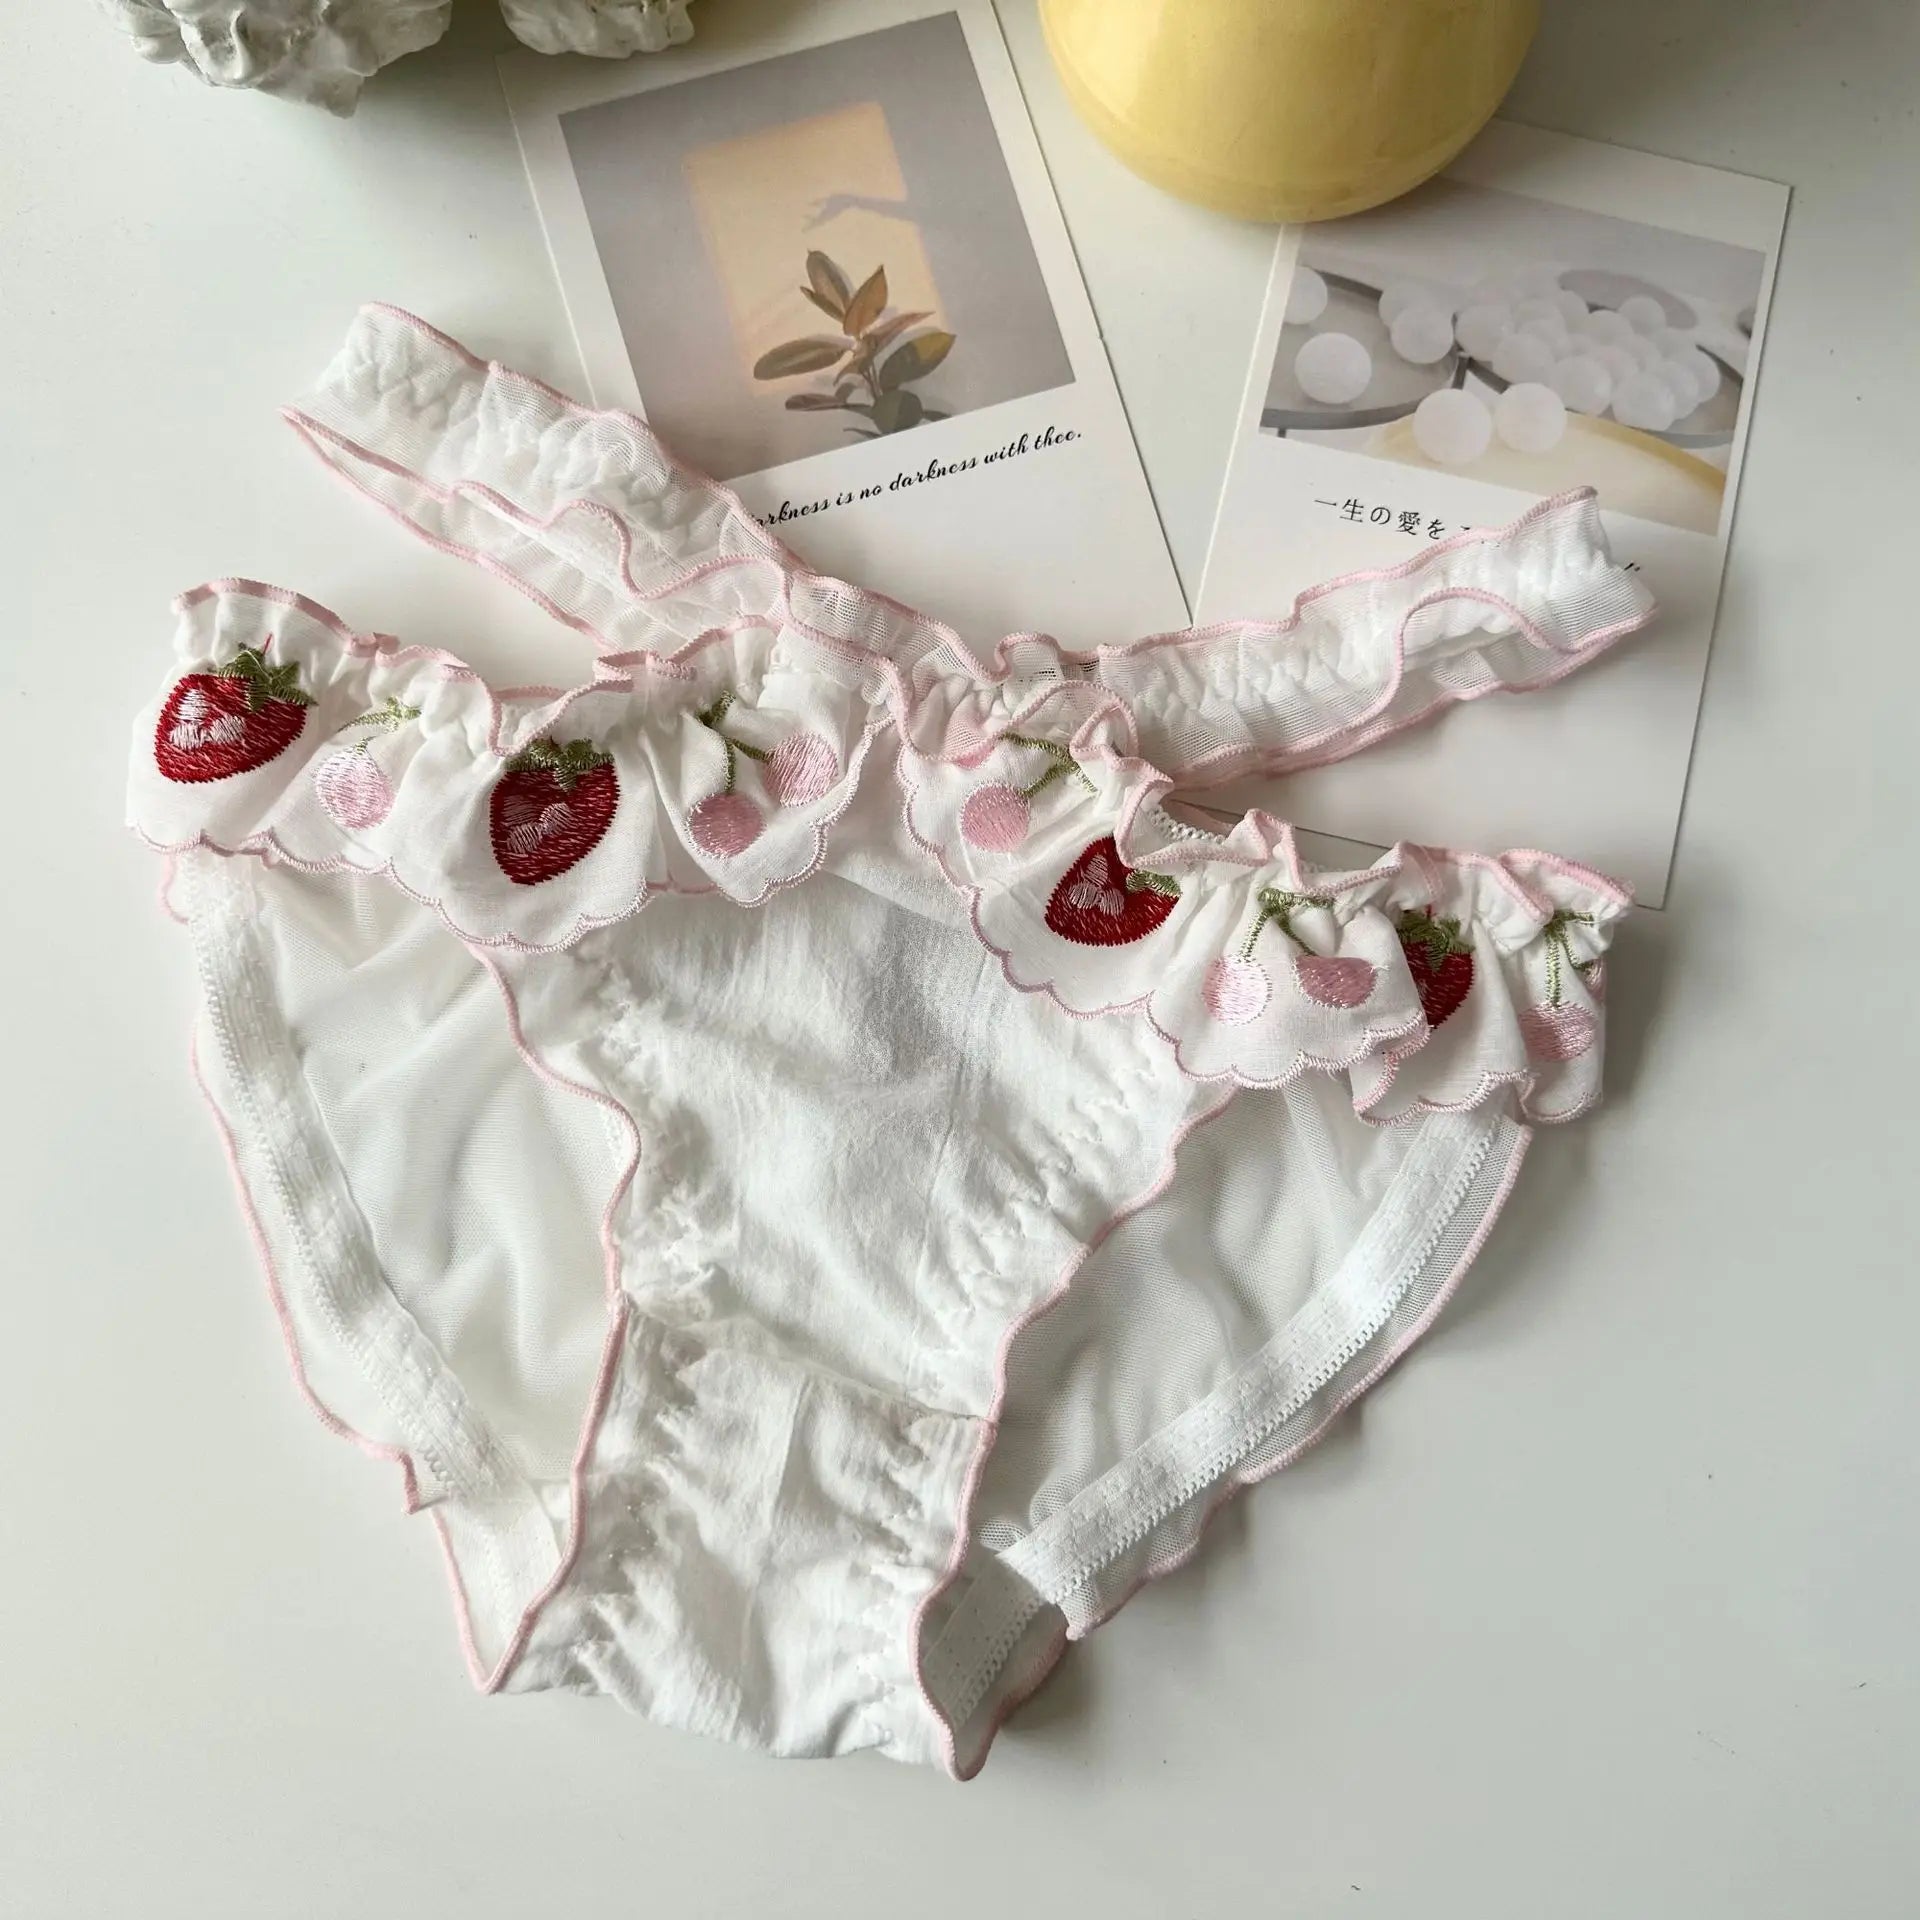 2-Piece Strawberry Embroidered Cottagecore Undergarments Set